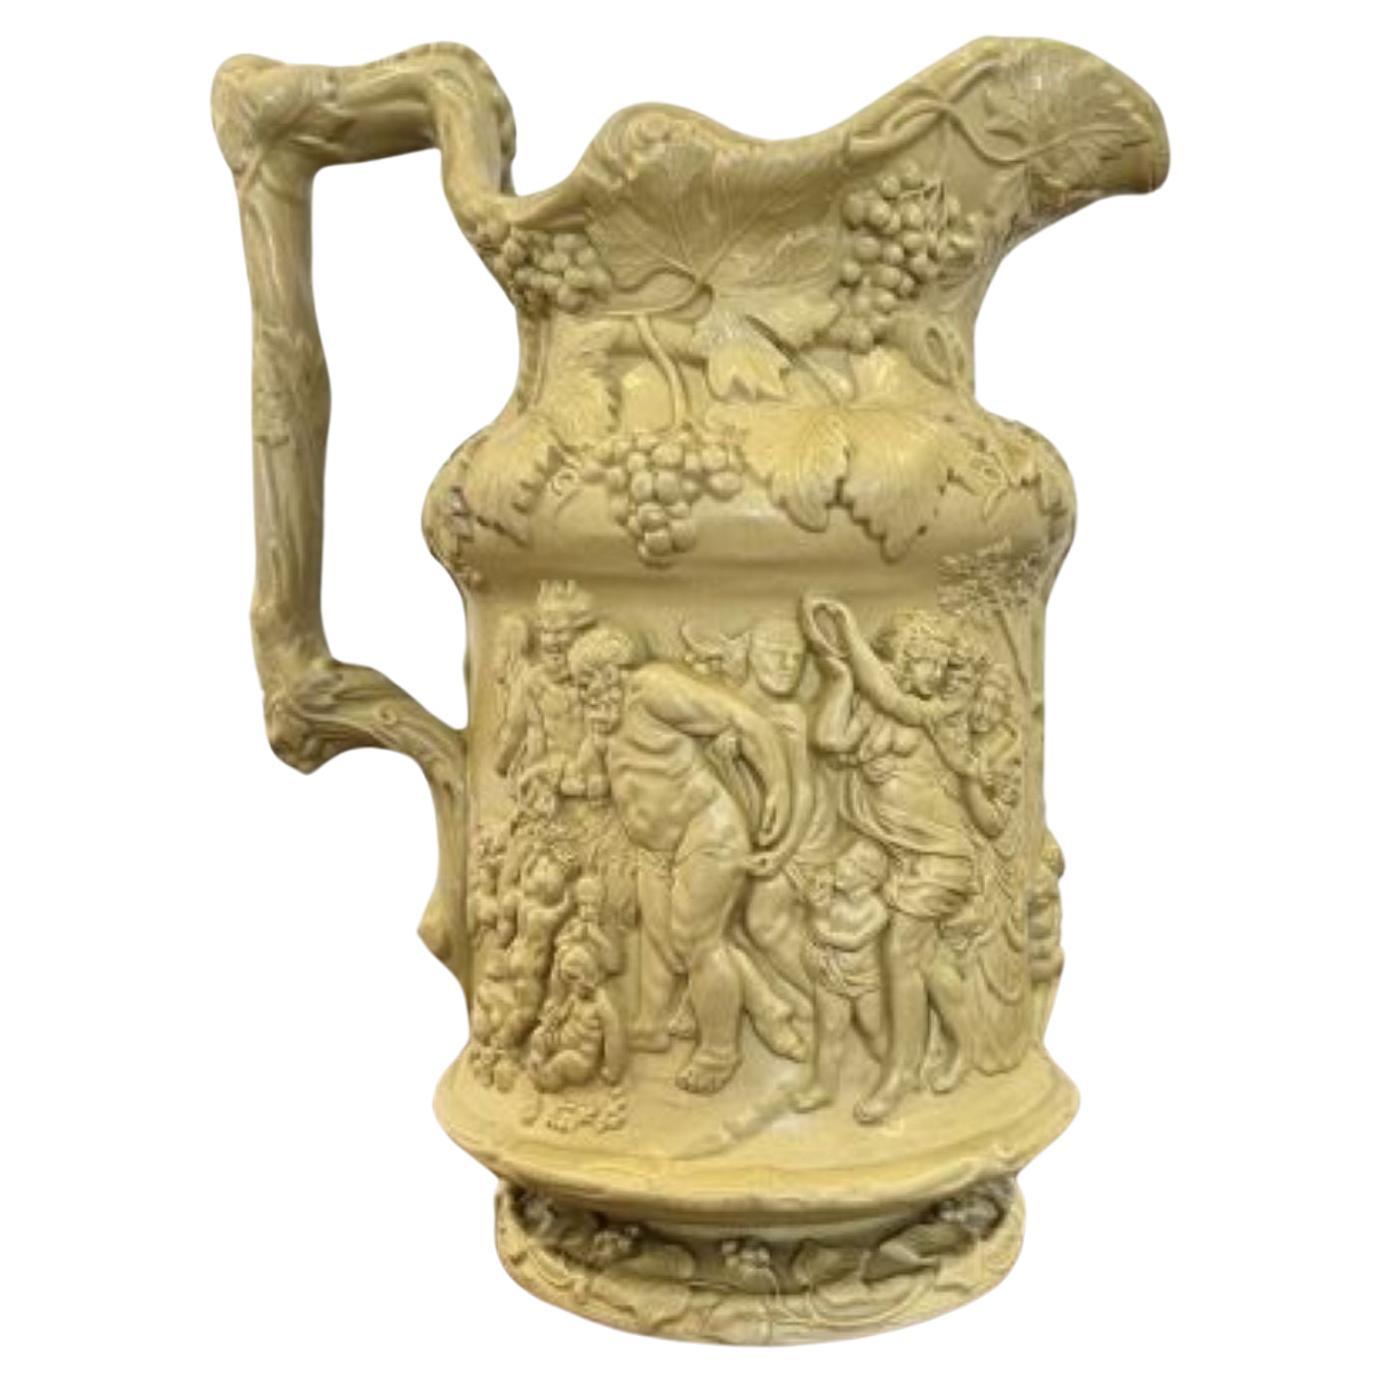 Antique quality relief moulded jug